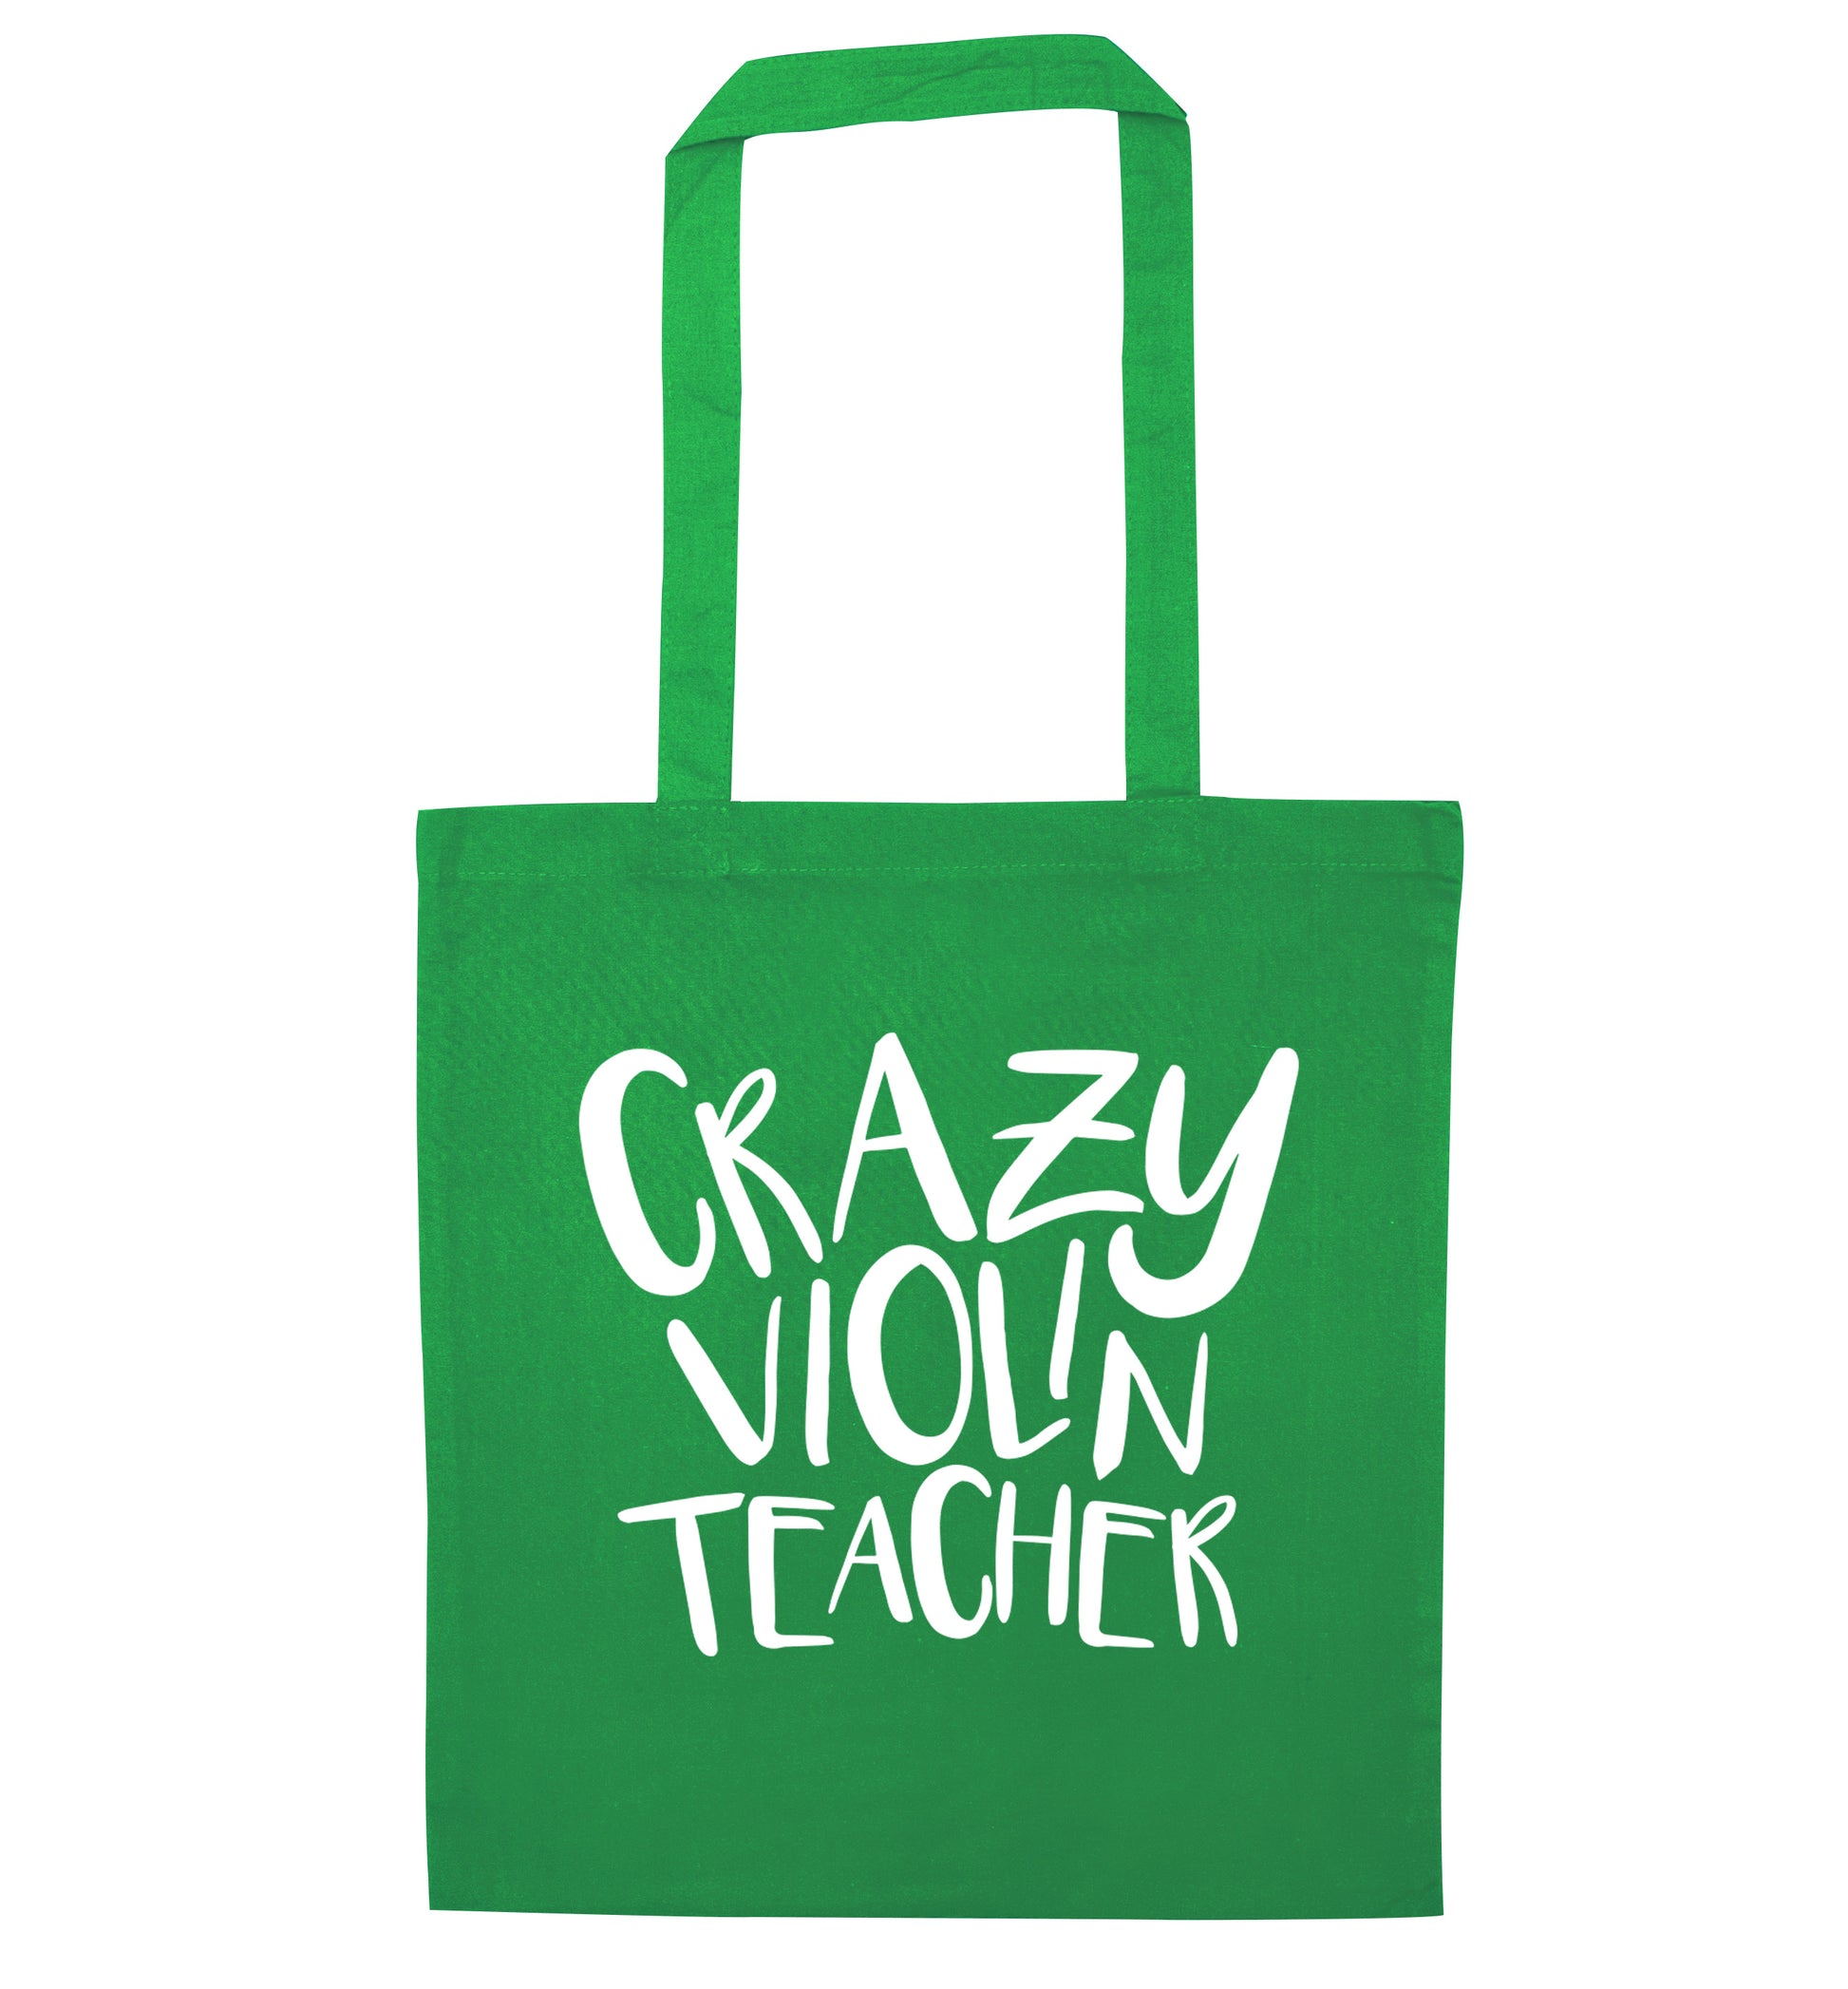 Crazy violin teacher green tote bag